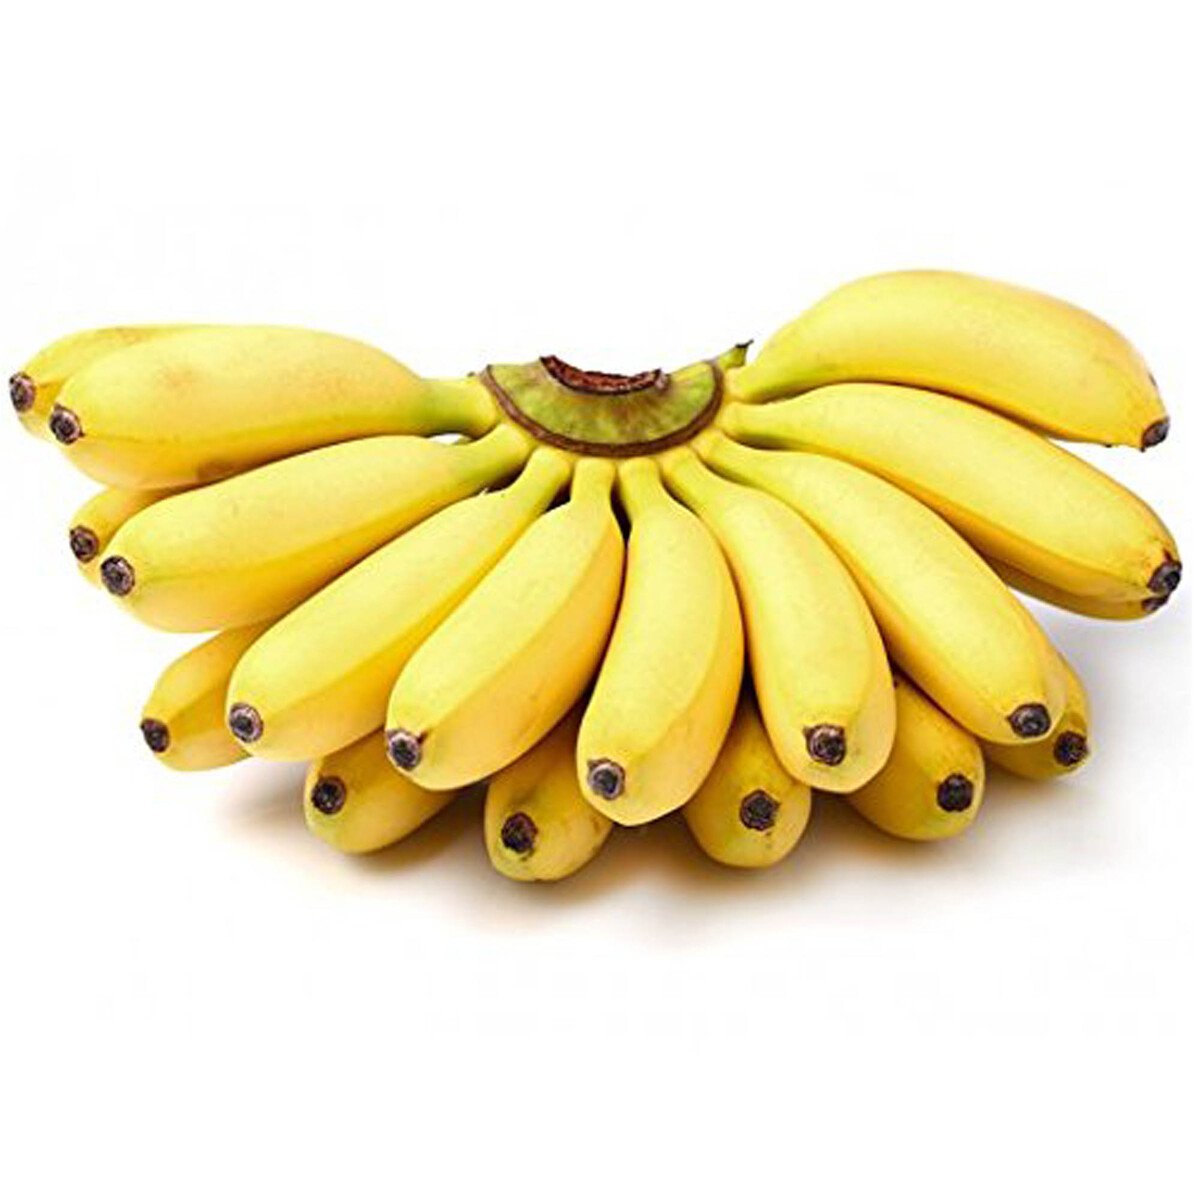 Banana Poovan India 500 g